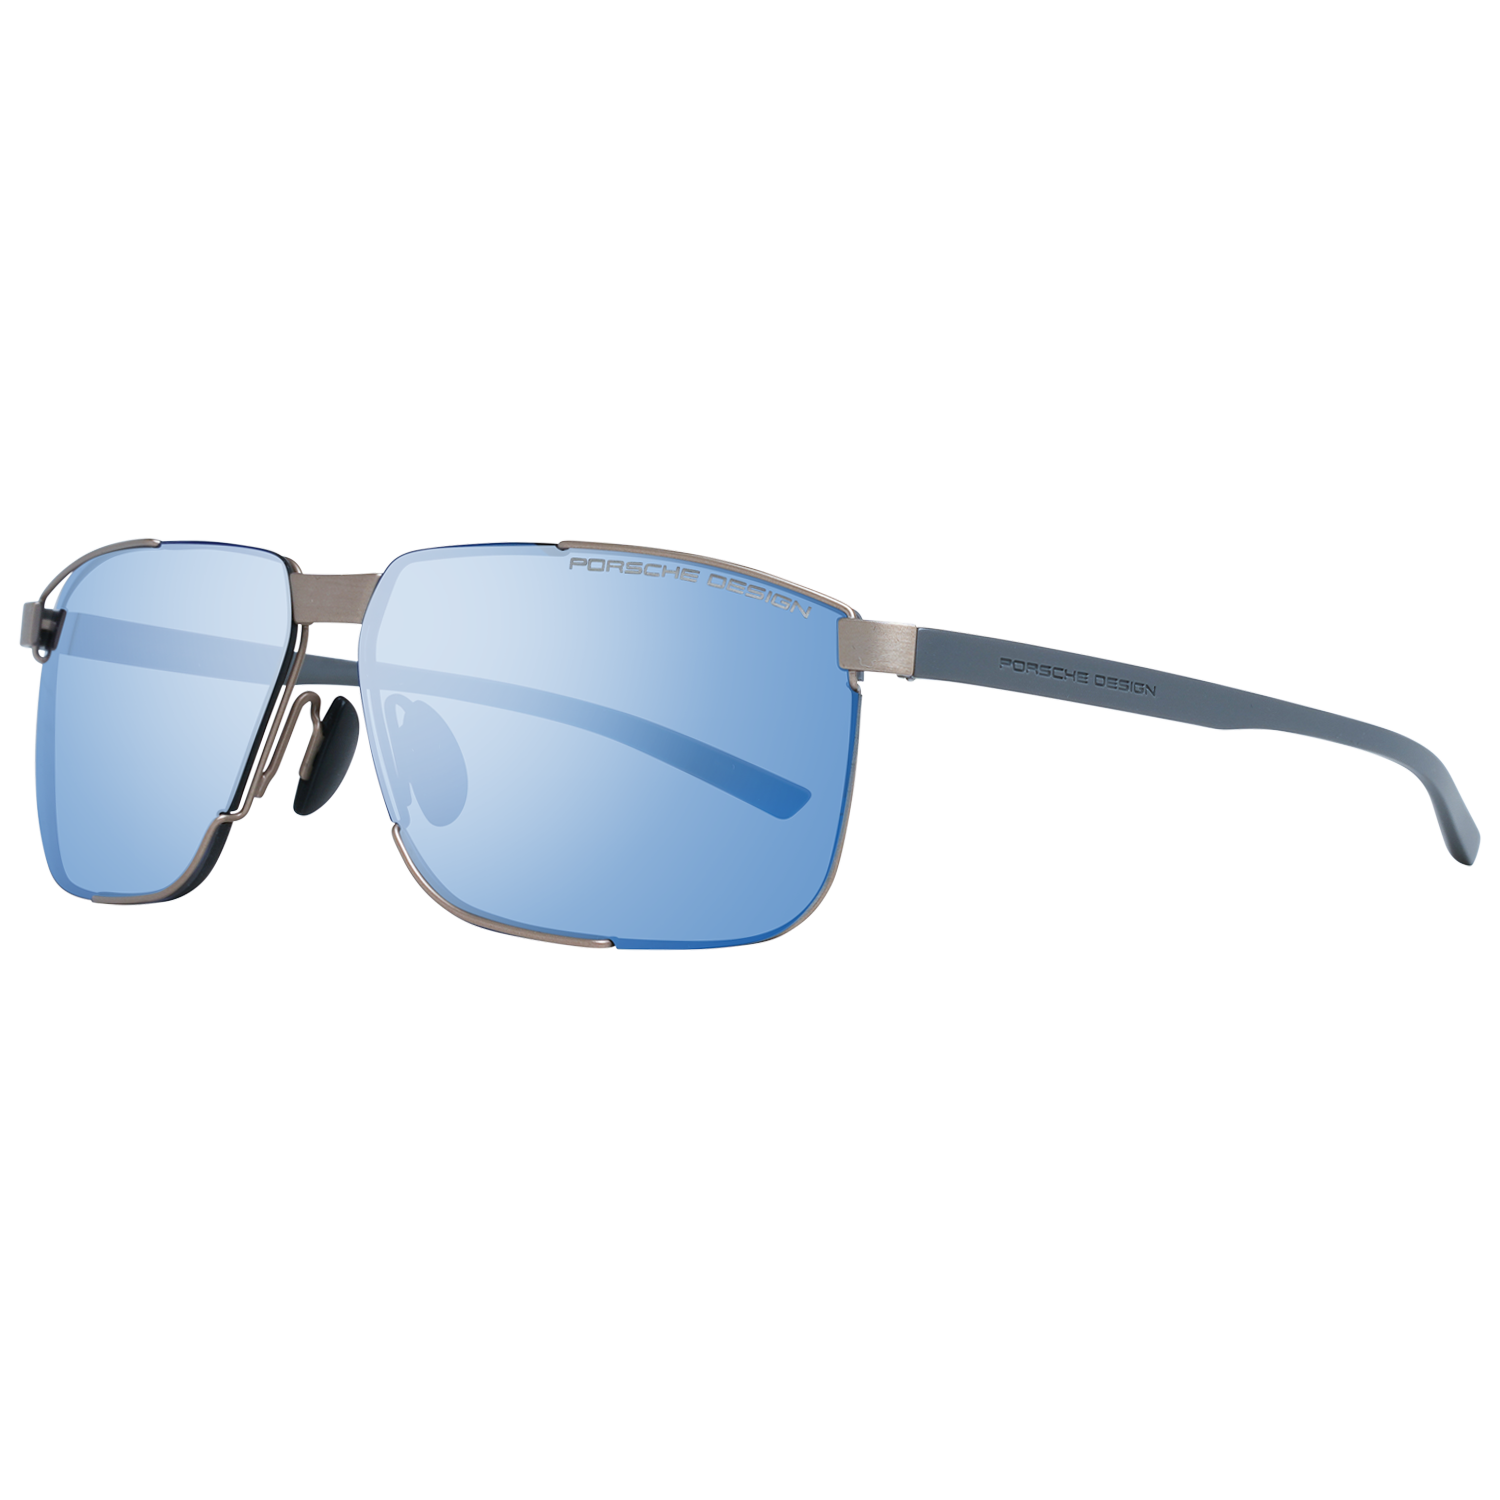 Porsche Design Sunglasses Porsche Design Sunglasses P8680 D 64 Eyeglasses Eyewear UK USA Australia 